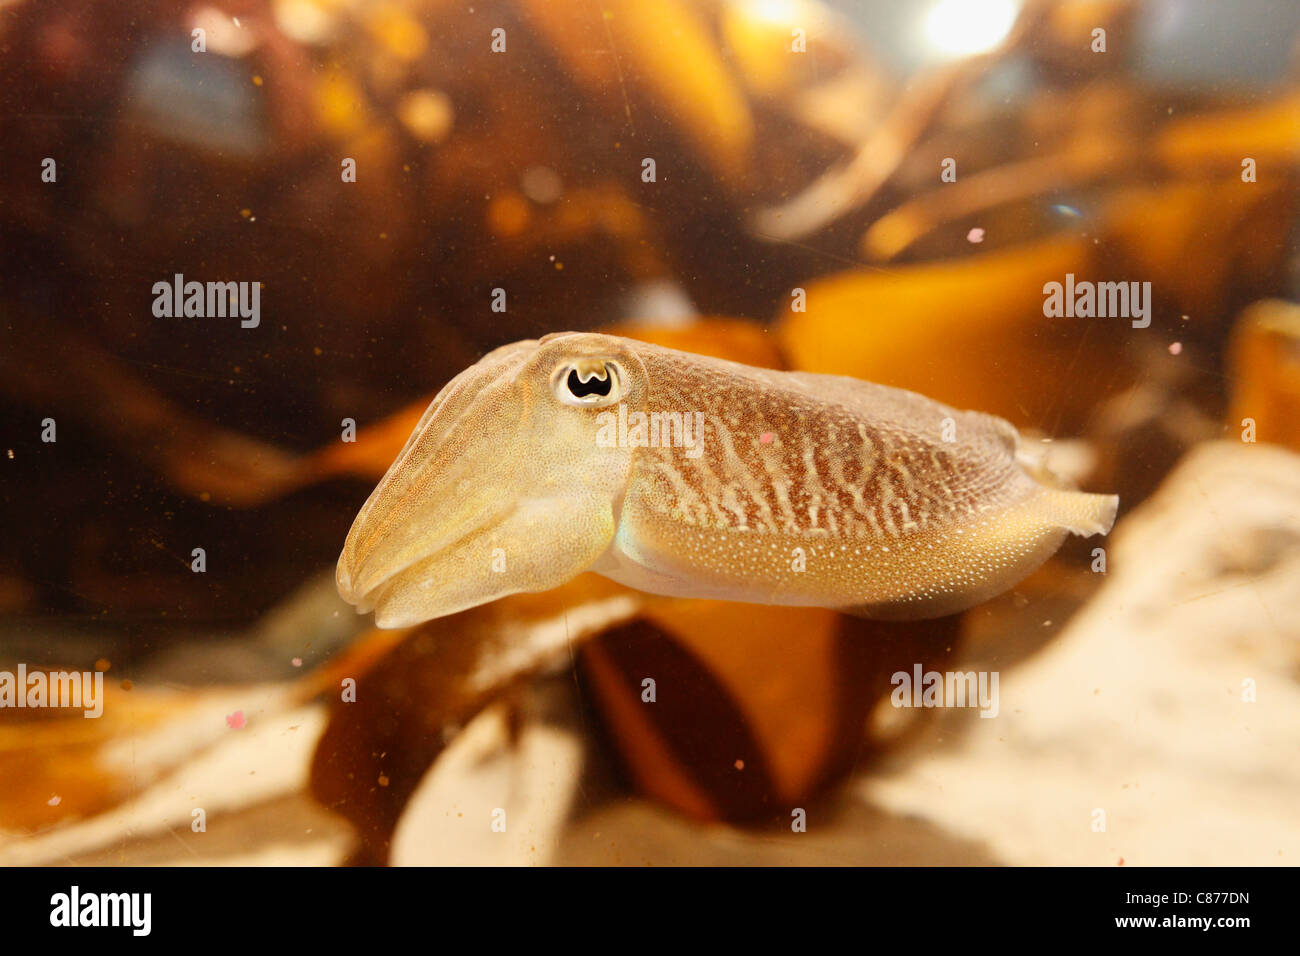 United Kingdom, Northern Ireland, County Down, Portaferry, Close up of Baby Cuttlefish at Aquarium Exploris Stock Photo